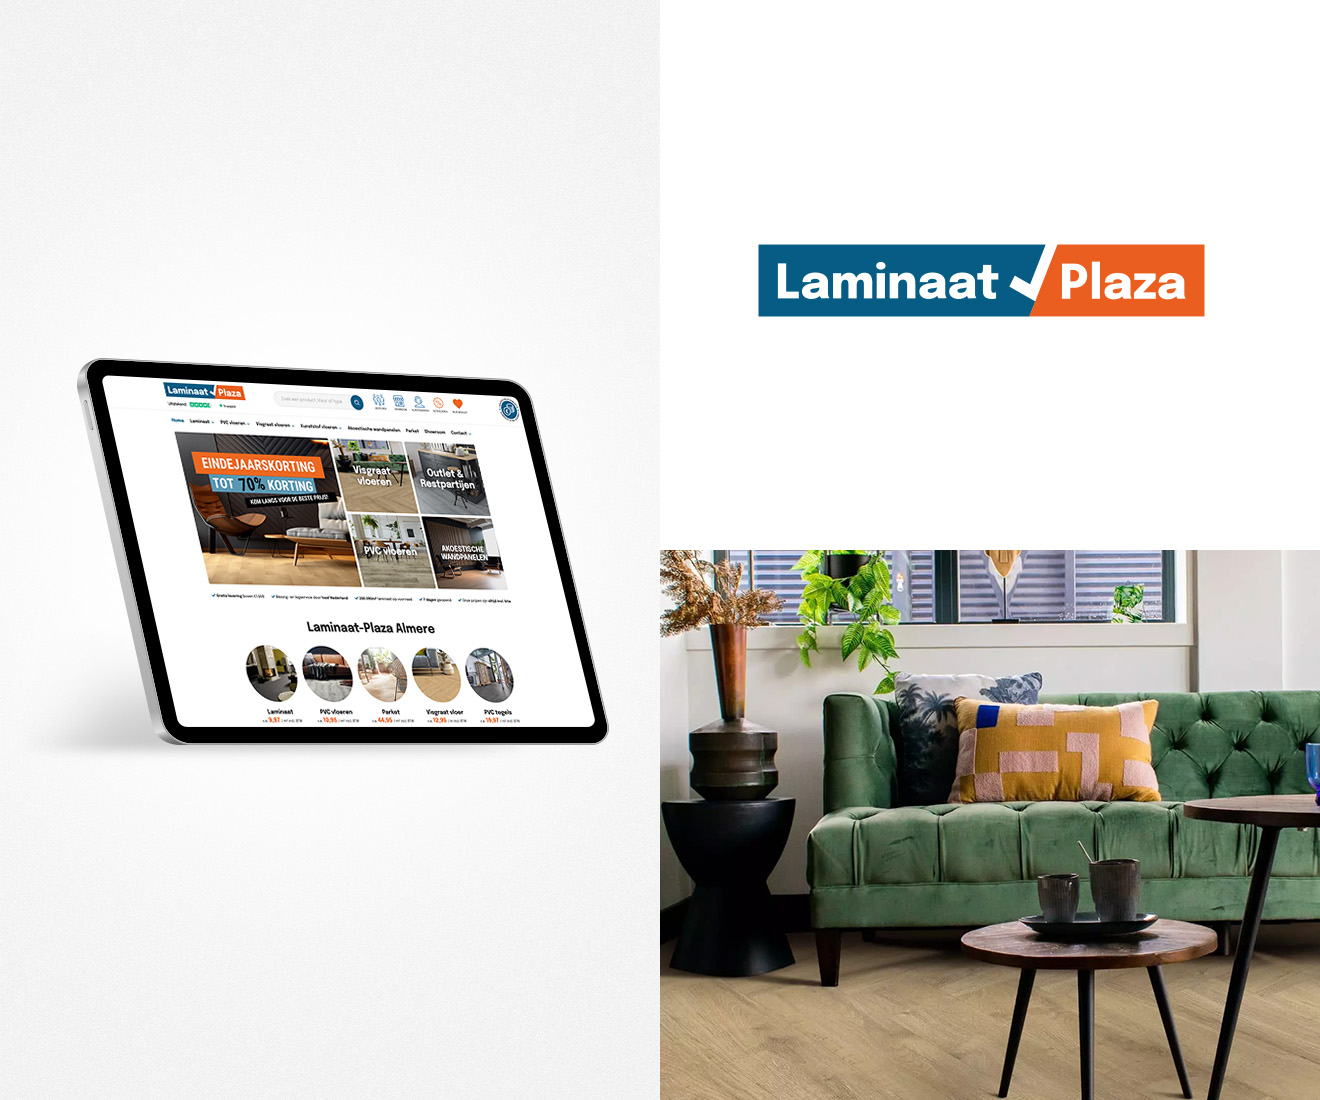 Laminaat plaza online marketing case